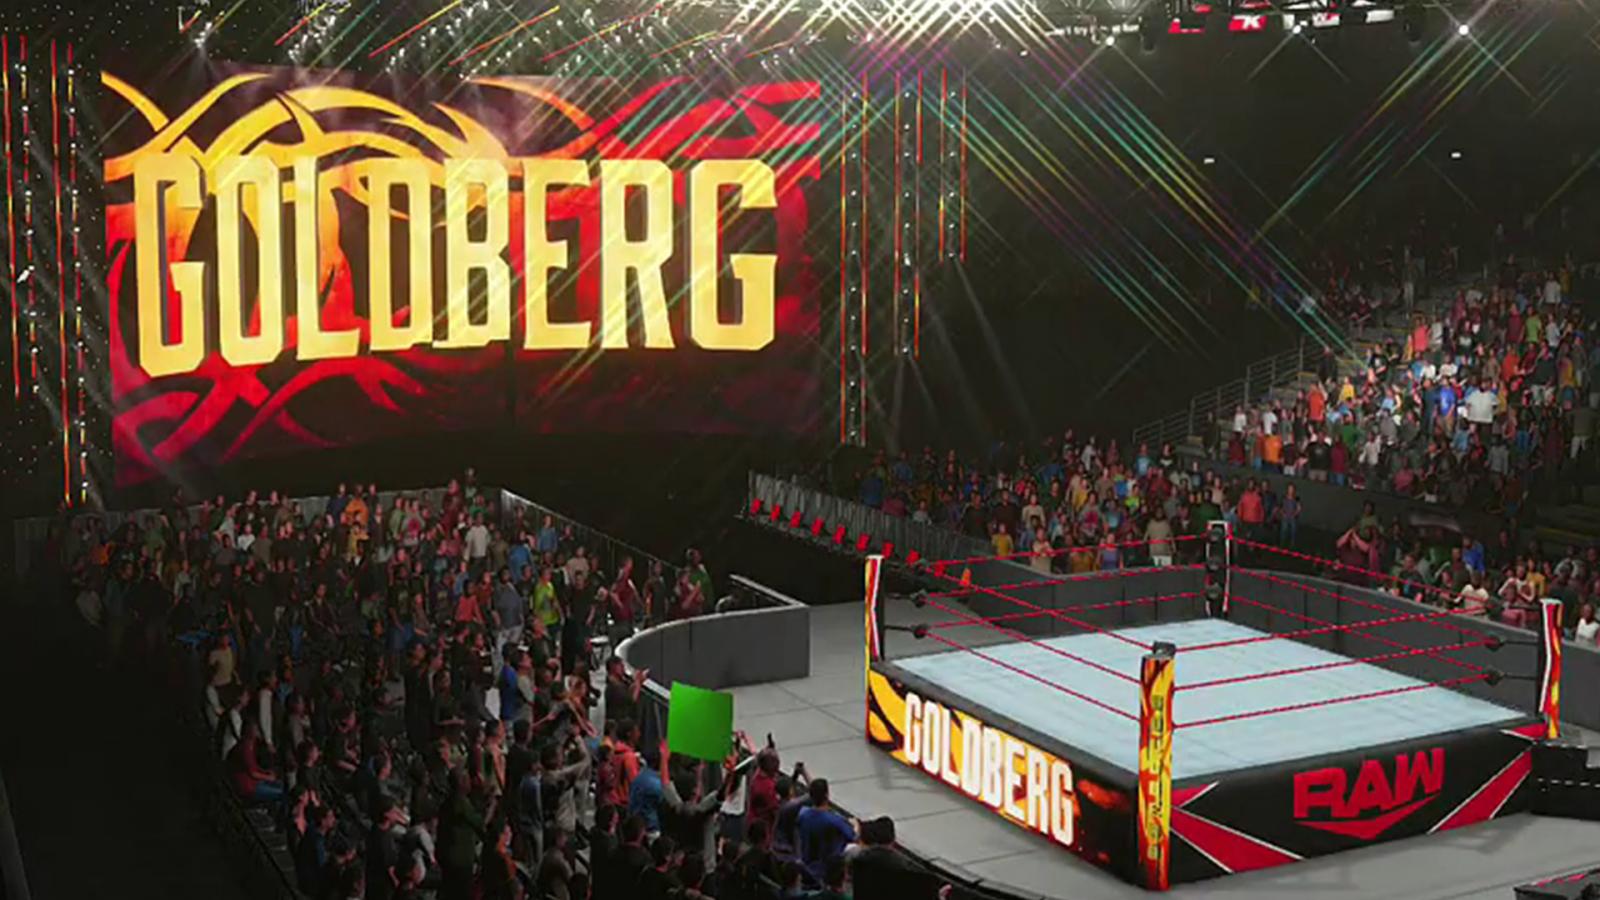 WWE 2k19 Goldberg mod 4 by R-MAZE on DeviantArt